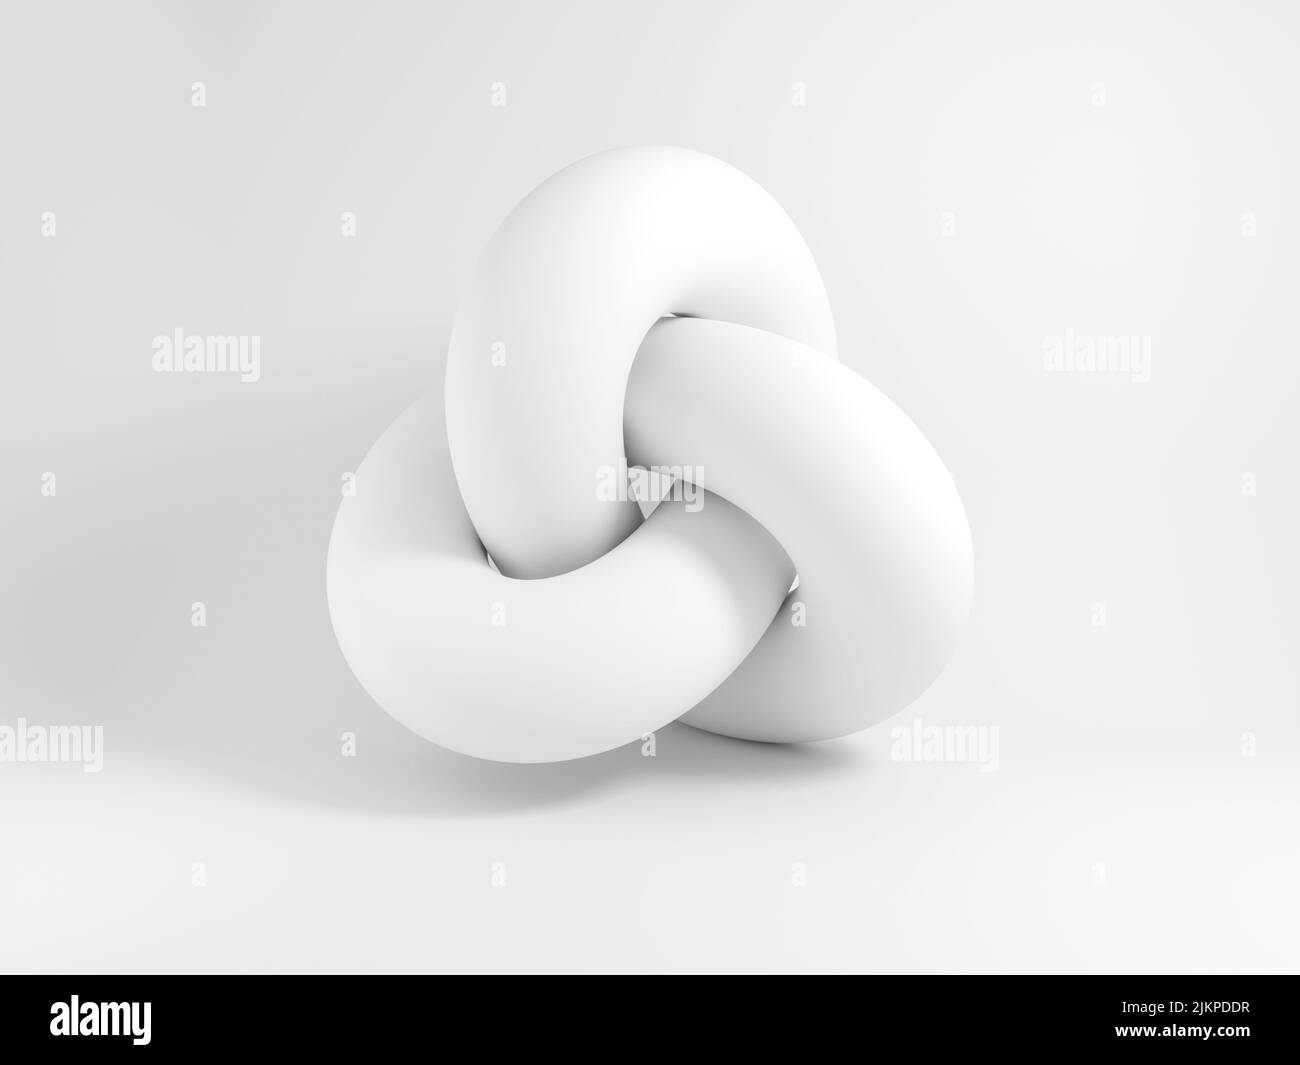 Abstract white geometric shape, torus knot, 3d rendering illustration Stock Photo